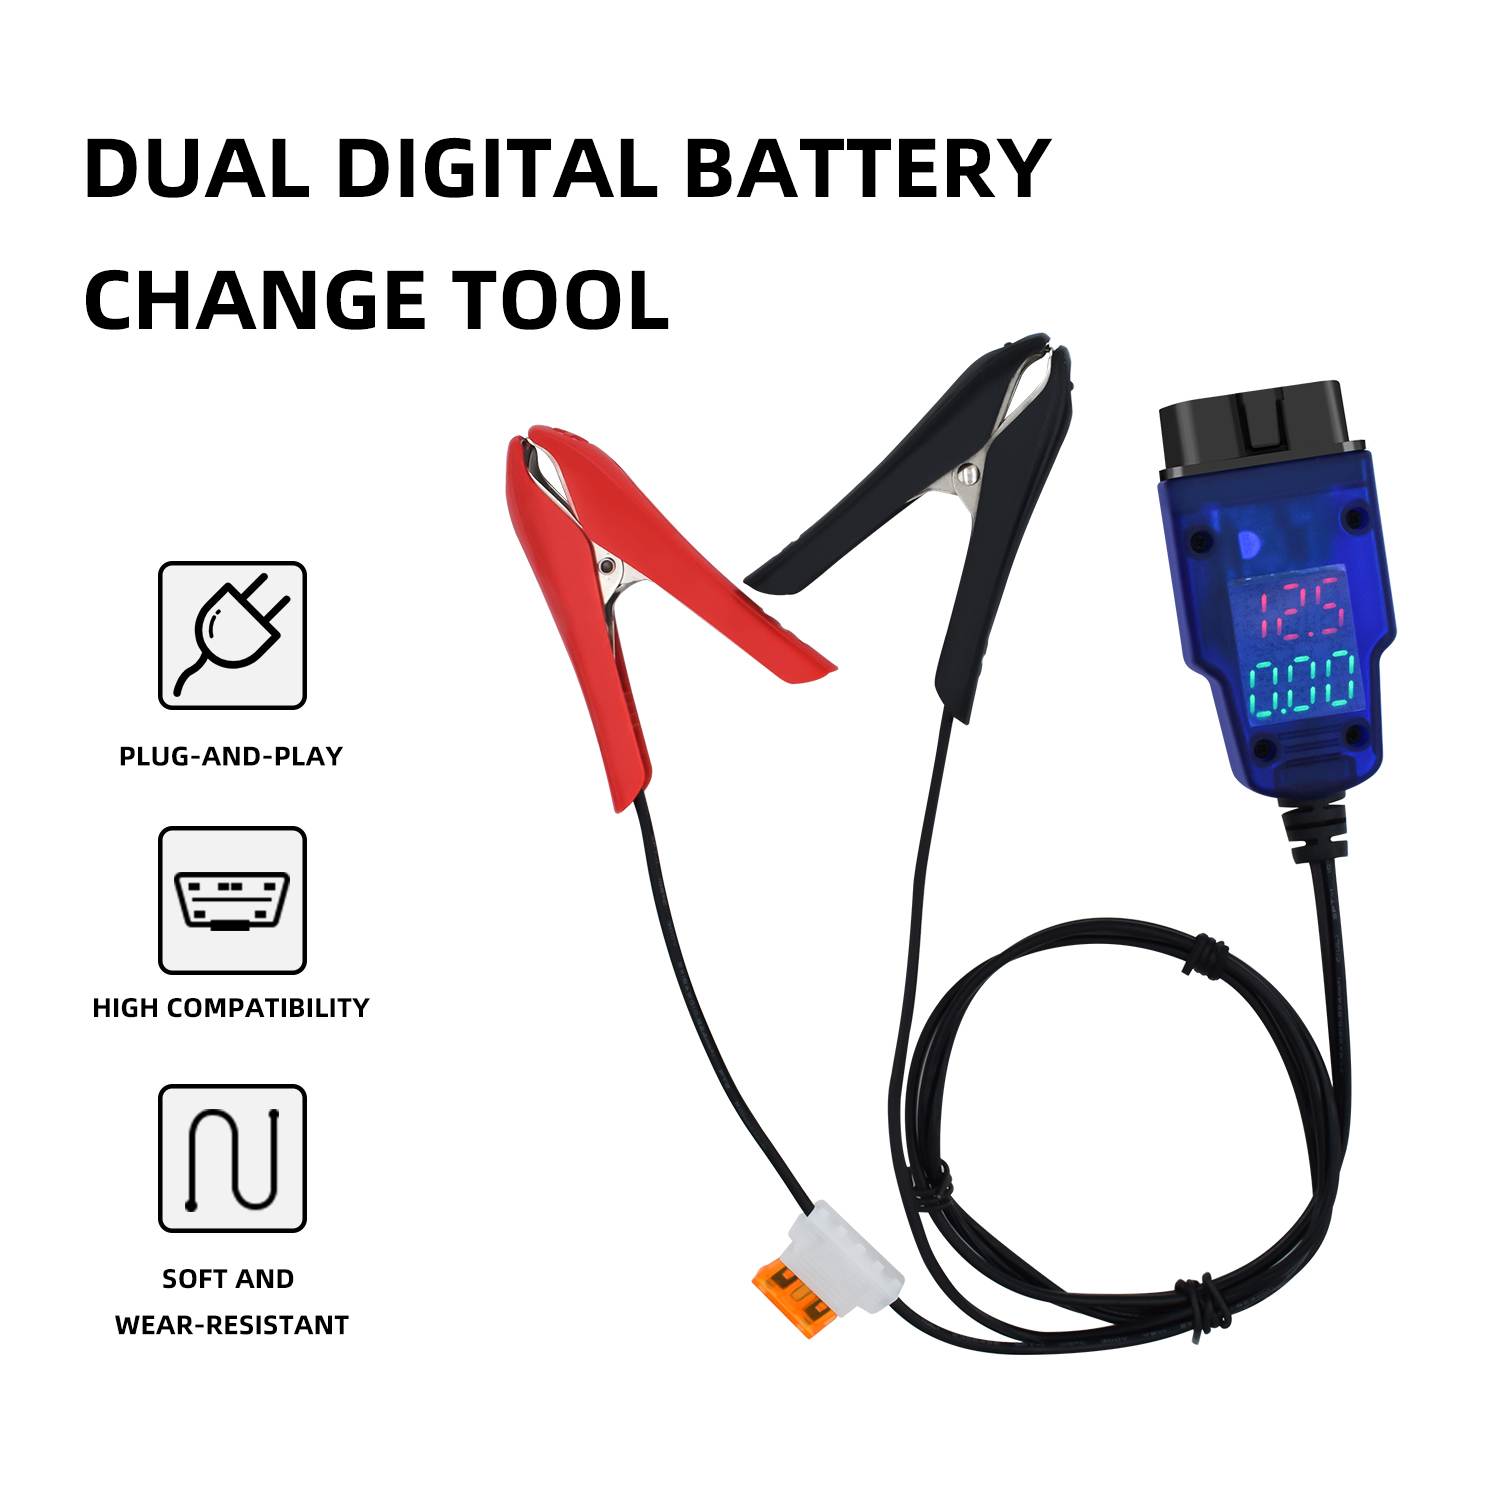 Dual Digital Battery Change Tool